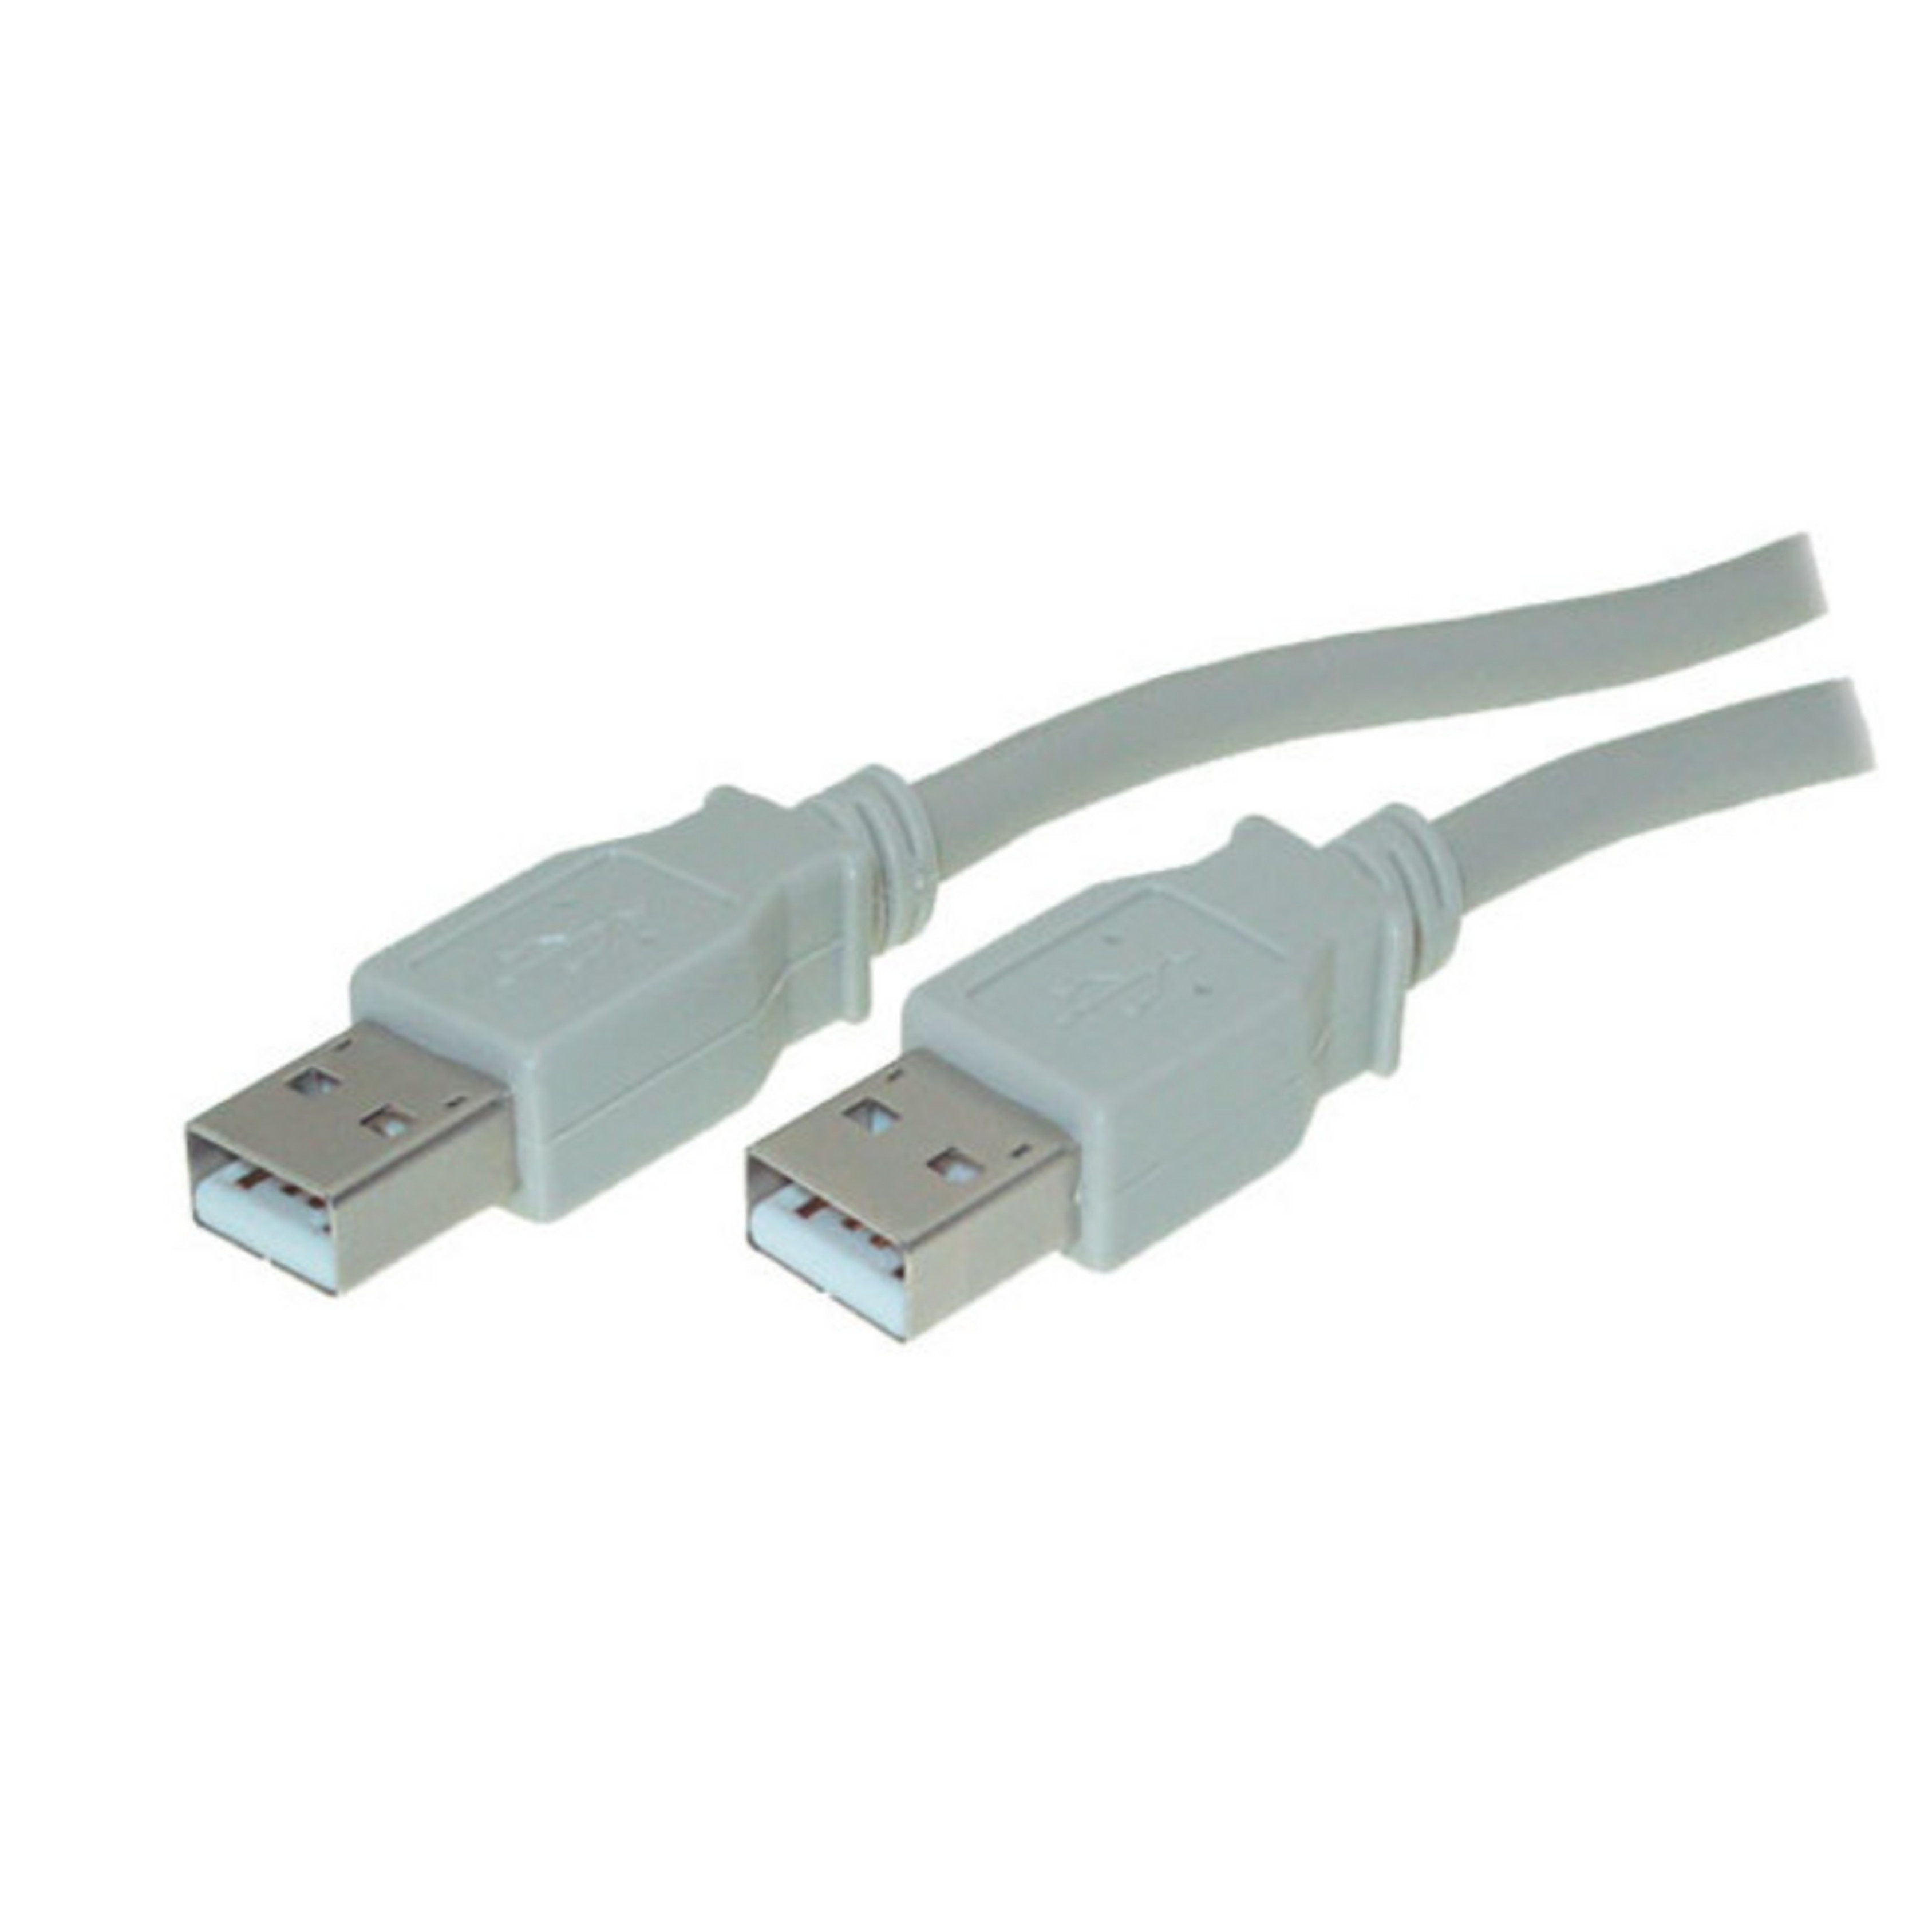 S/CONN MAXIMUM A 1,8m 2.0 USB Stecker / CONNECTIVITY Kabel USB USB Kabel Stecker A